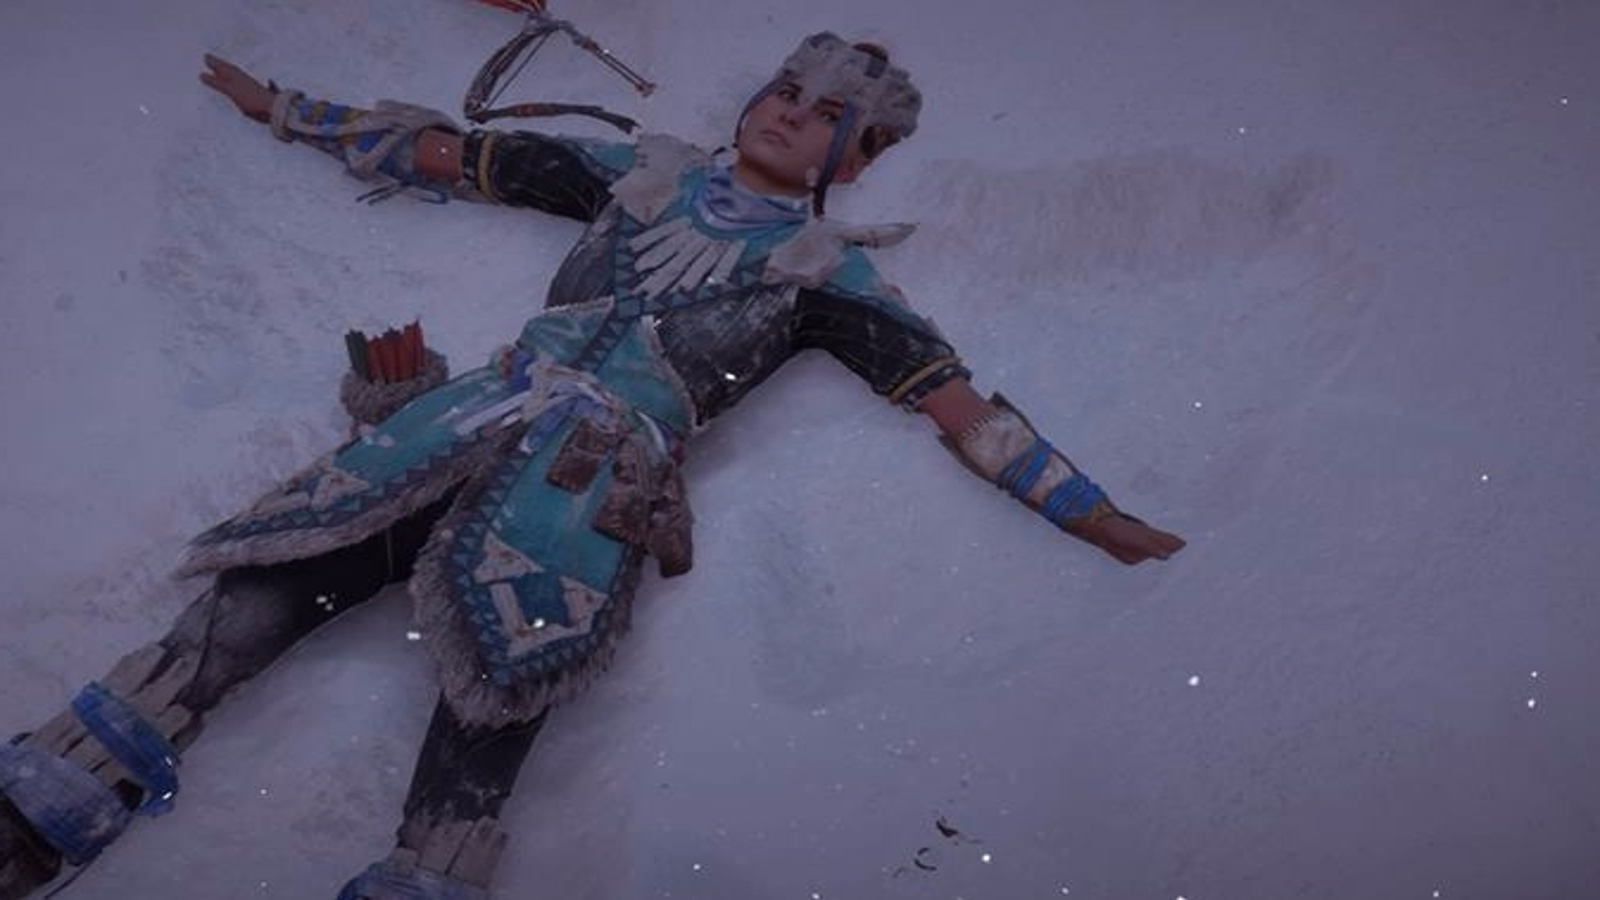 Horizon Zero Dawn - How to Start The Frozen Wilds DLC 